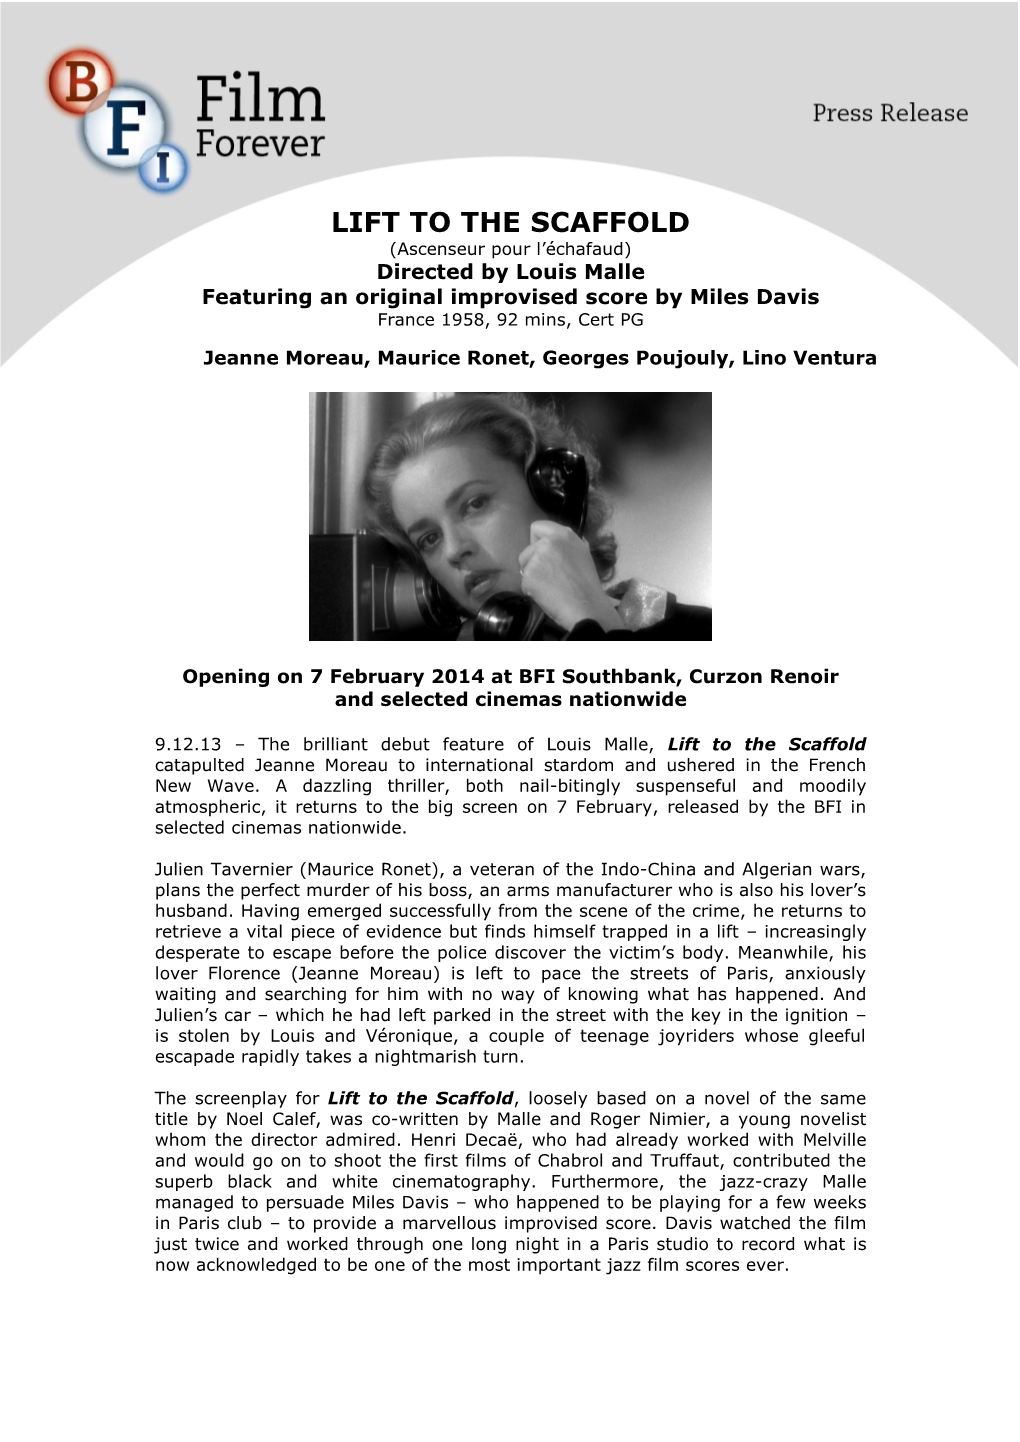 LIFT to the SCAFFOLD (Ascenseur Pour L’Échafaud) Directed by Louis Malle Featuring an Original Improvised Score by Miles Davis France 1958, 92 Mins, Cert PG